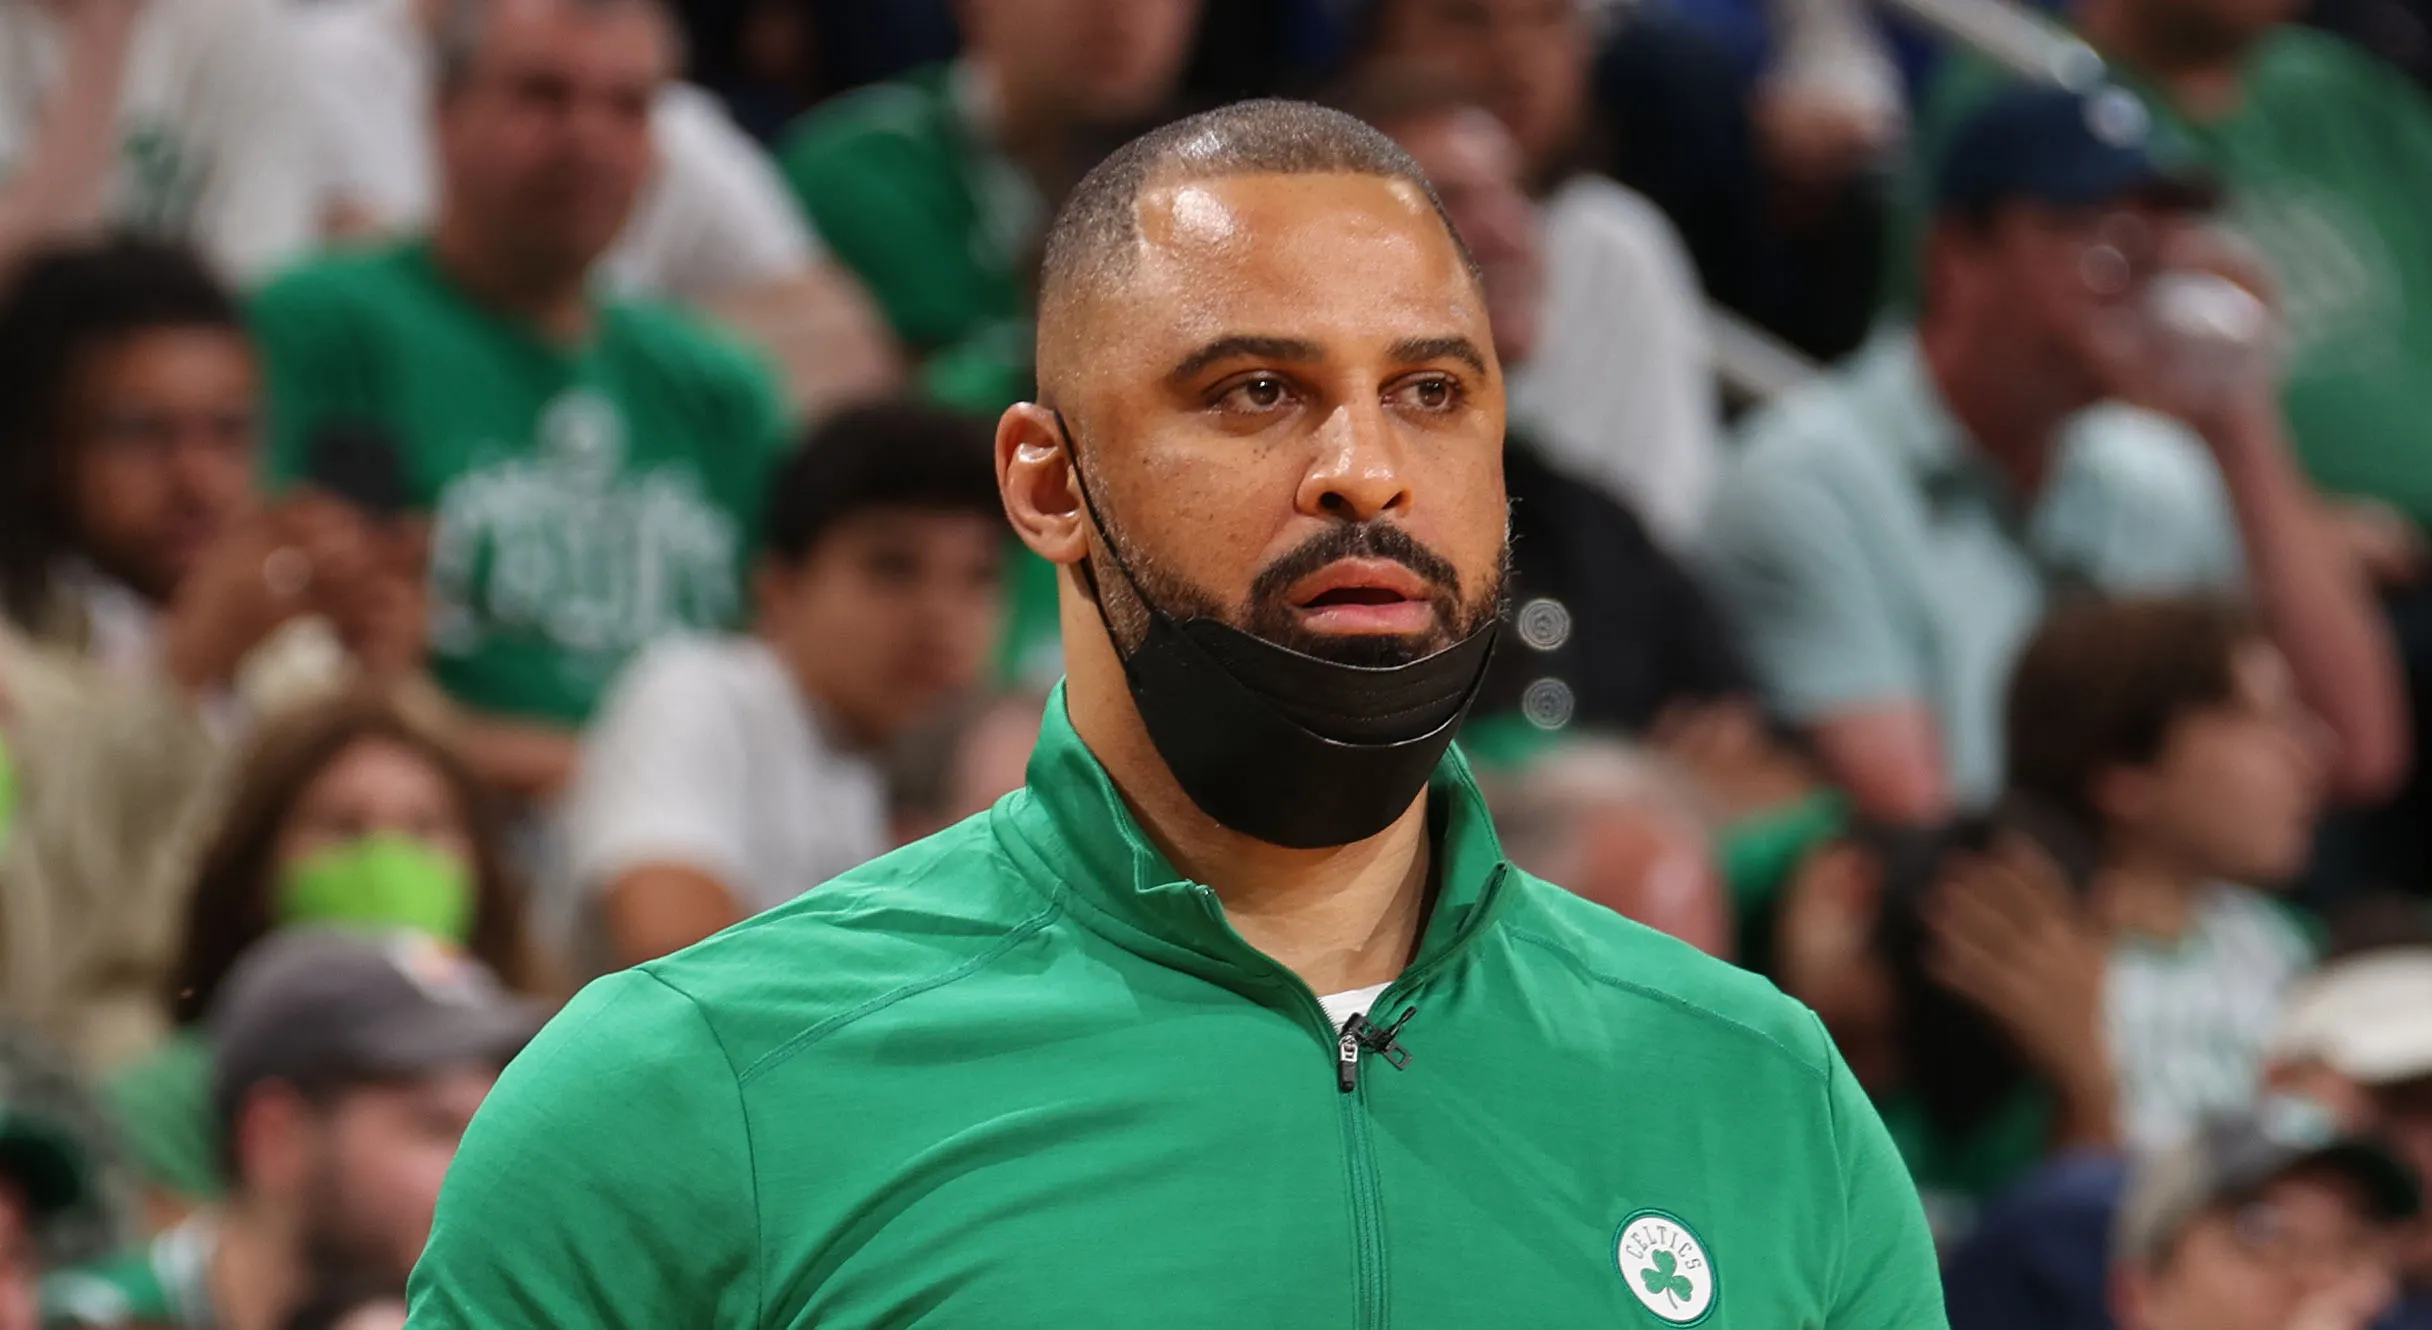 NBA coach faces disciplinary action over affair with Celtics staff